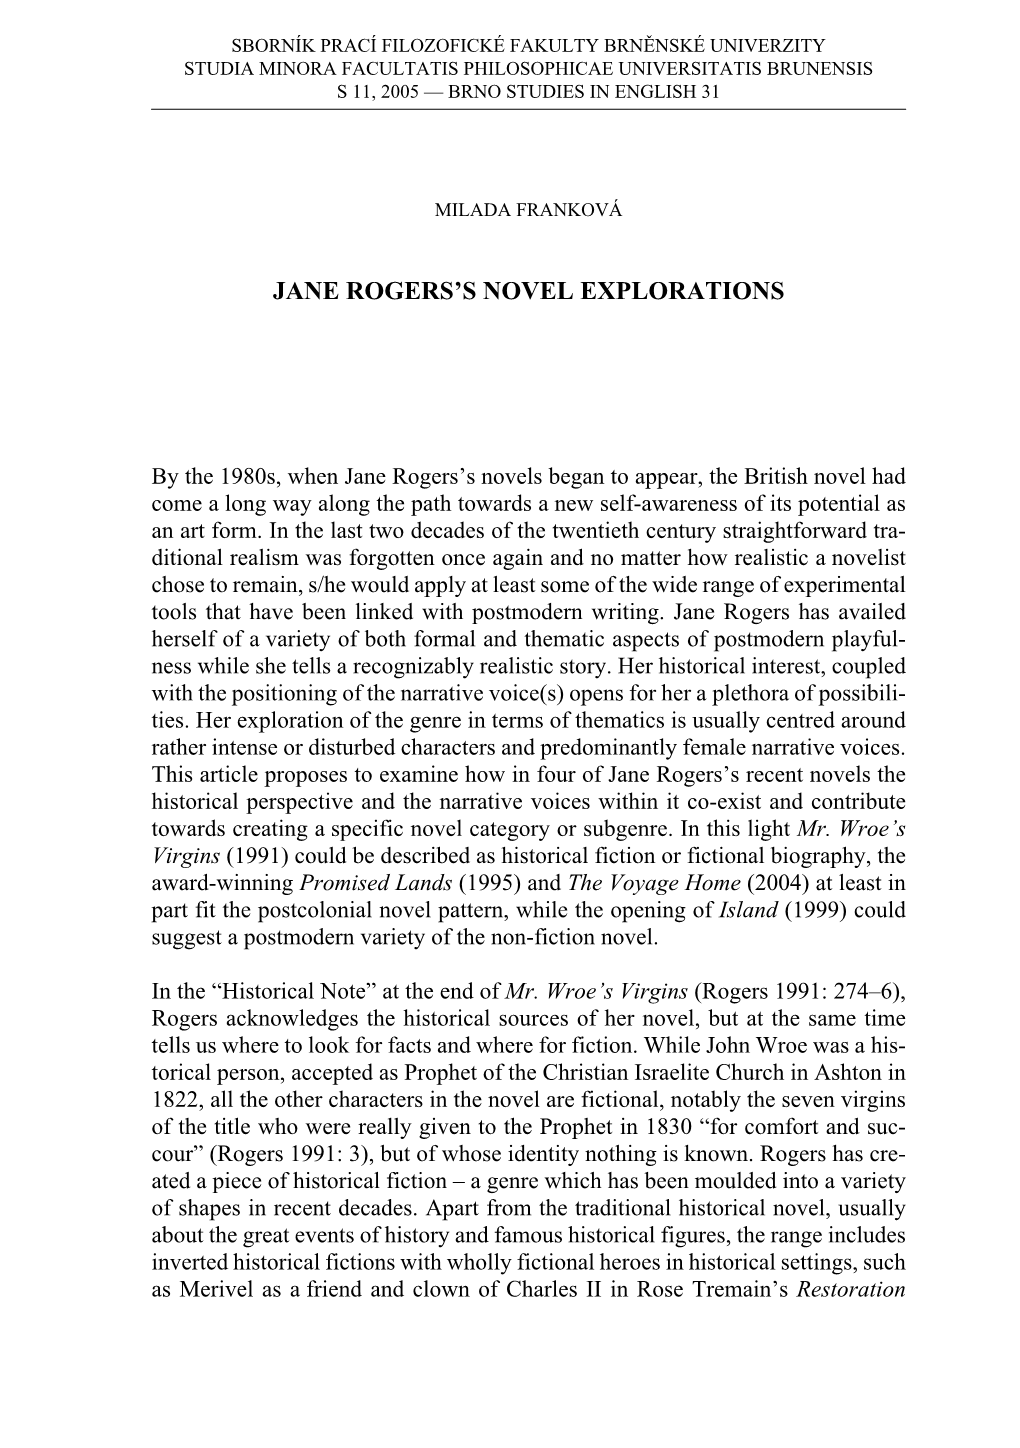 Jane ROGERS's NOVEL Explorations